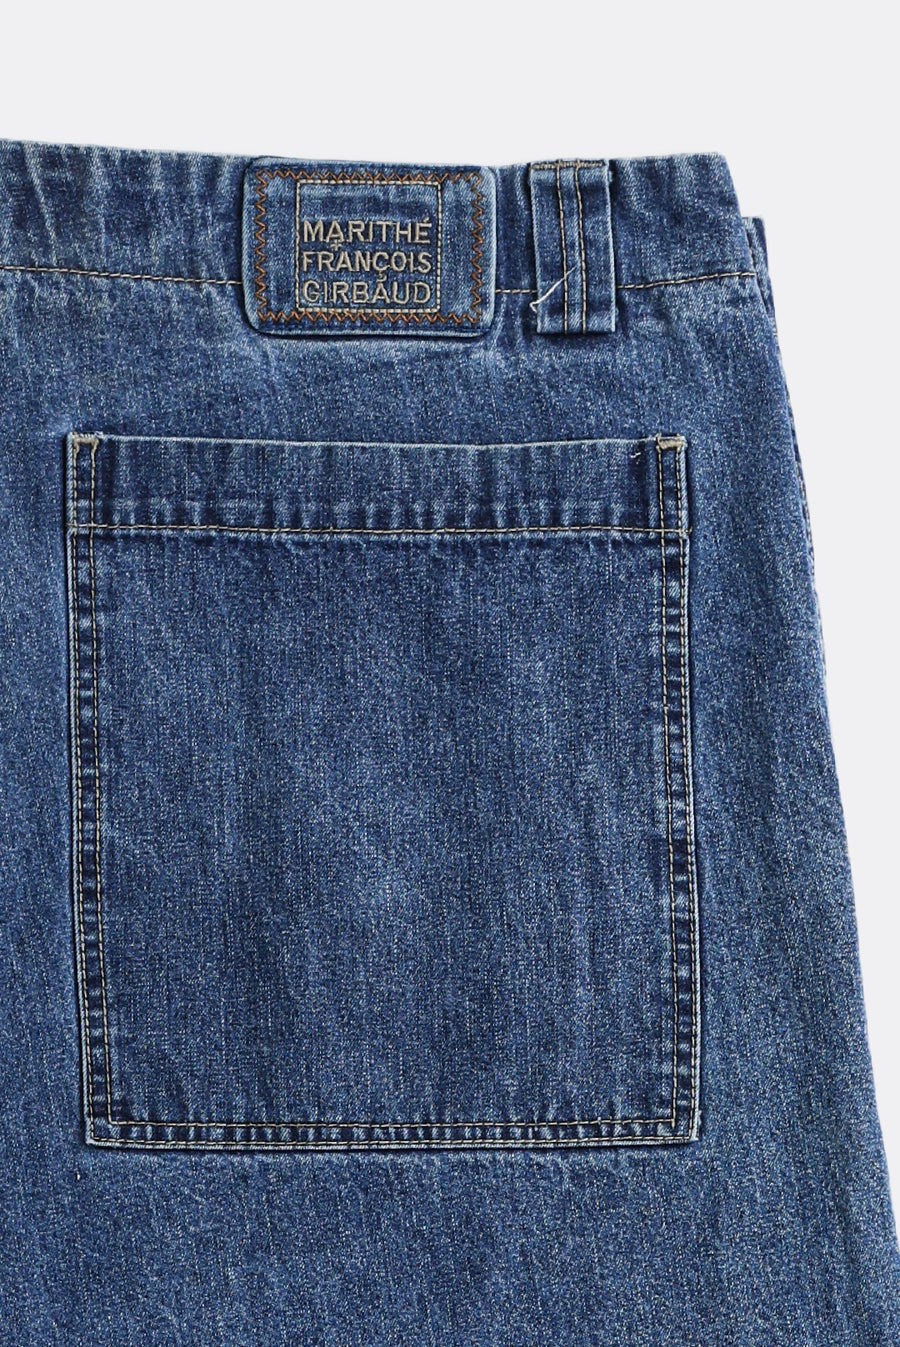 Vintage Girbaud Denim Shorts - W43